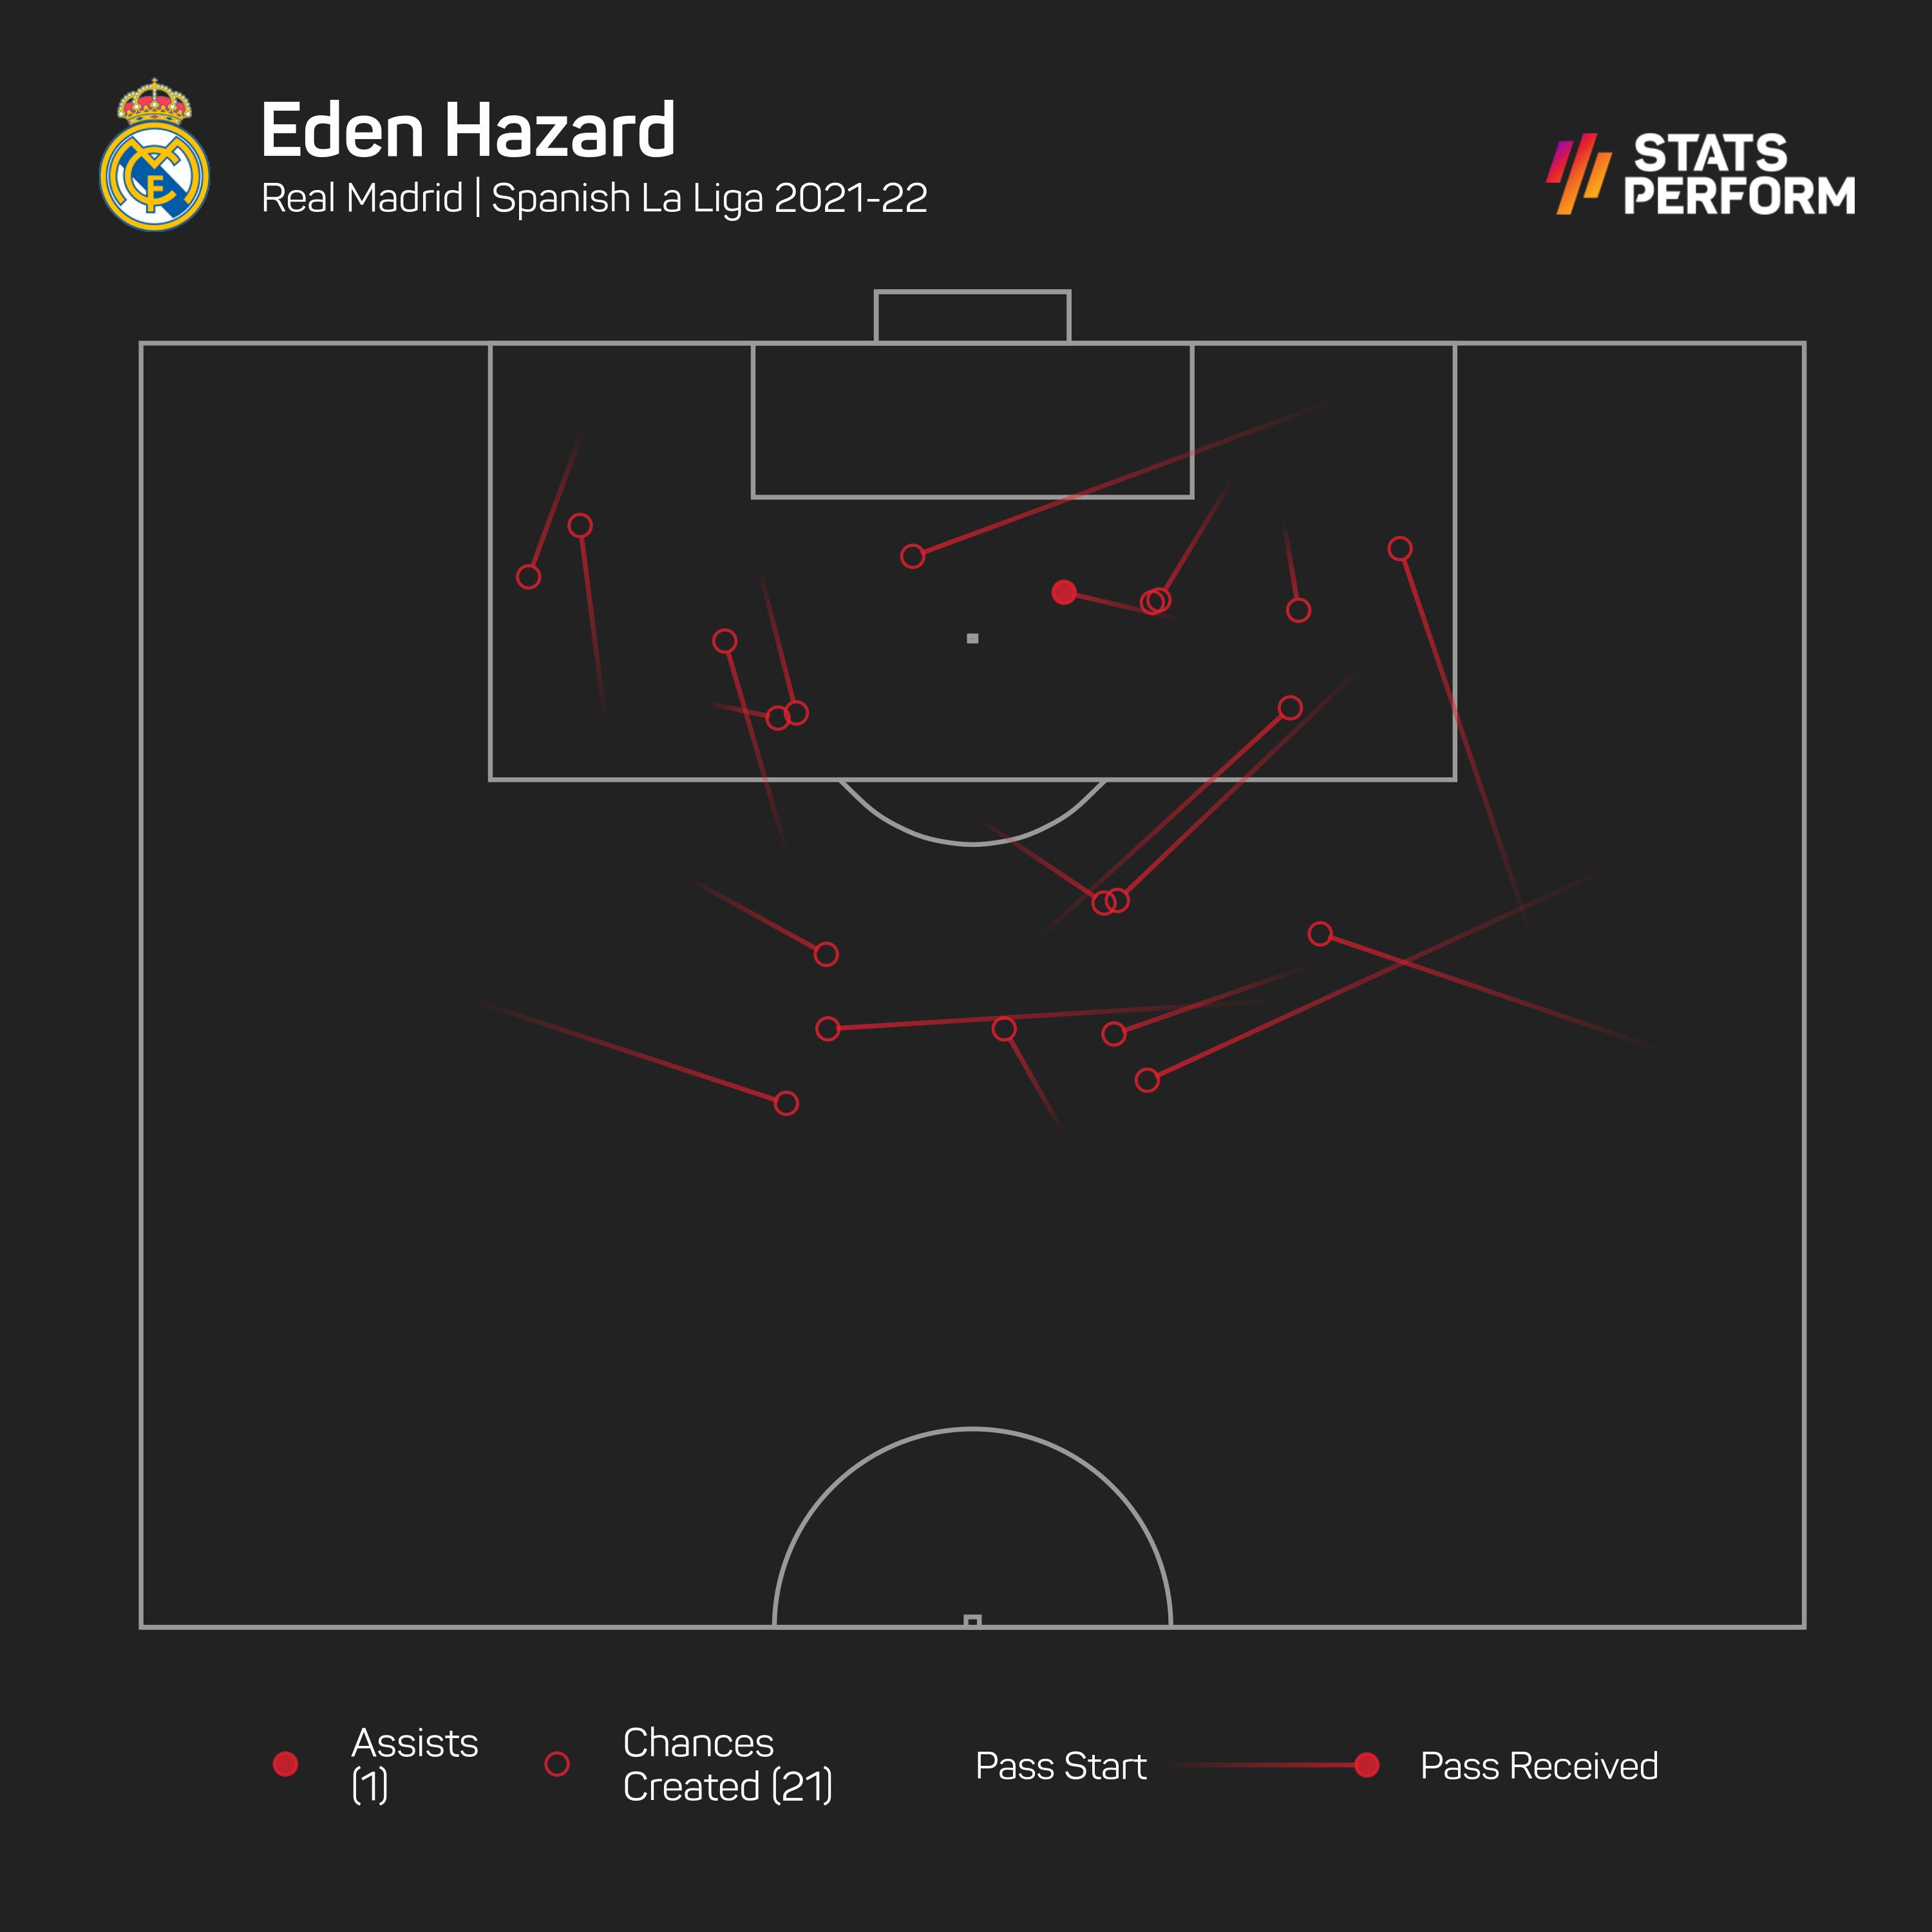 Eden Hazard has created 21 chances in LaLiga this season